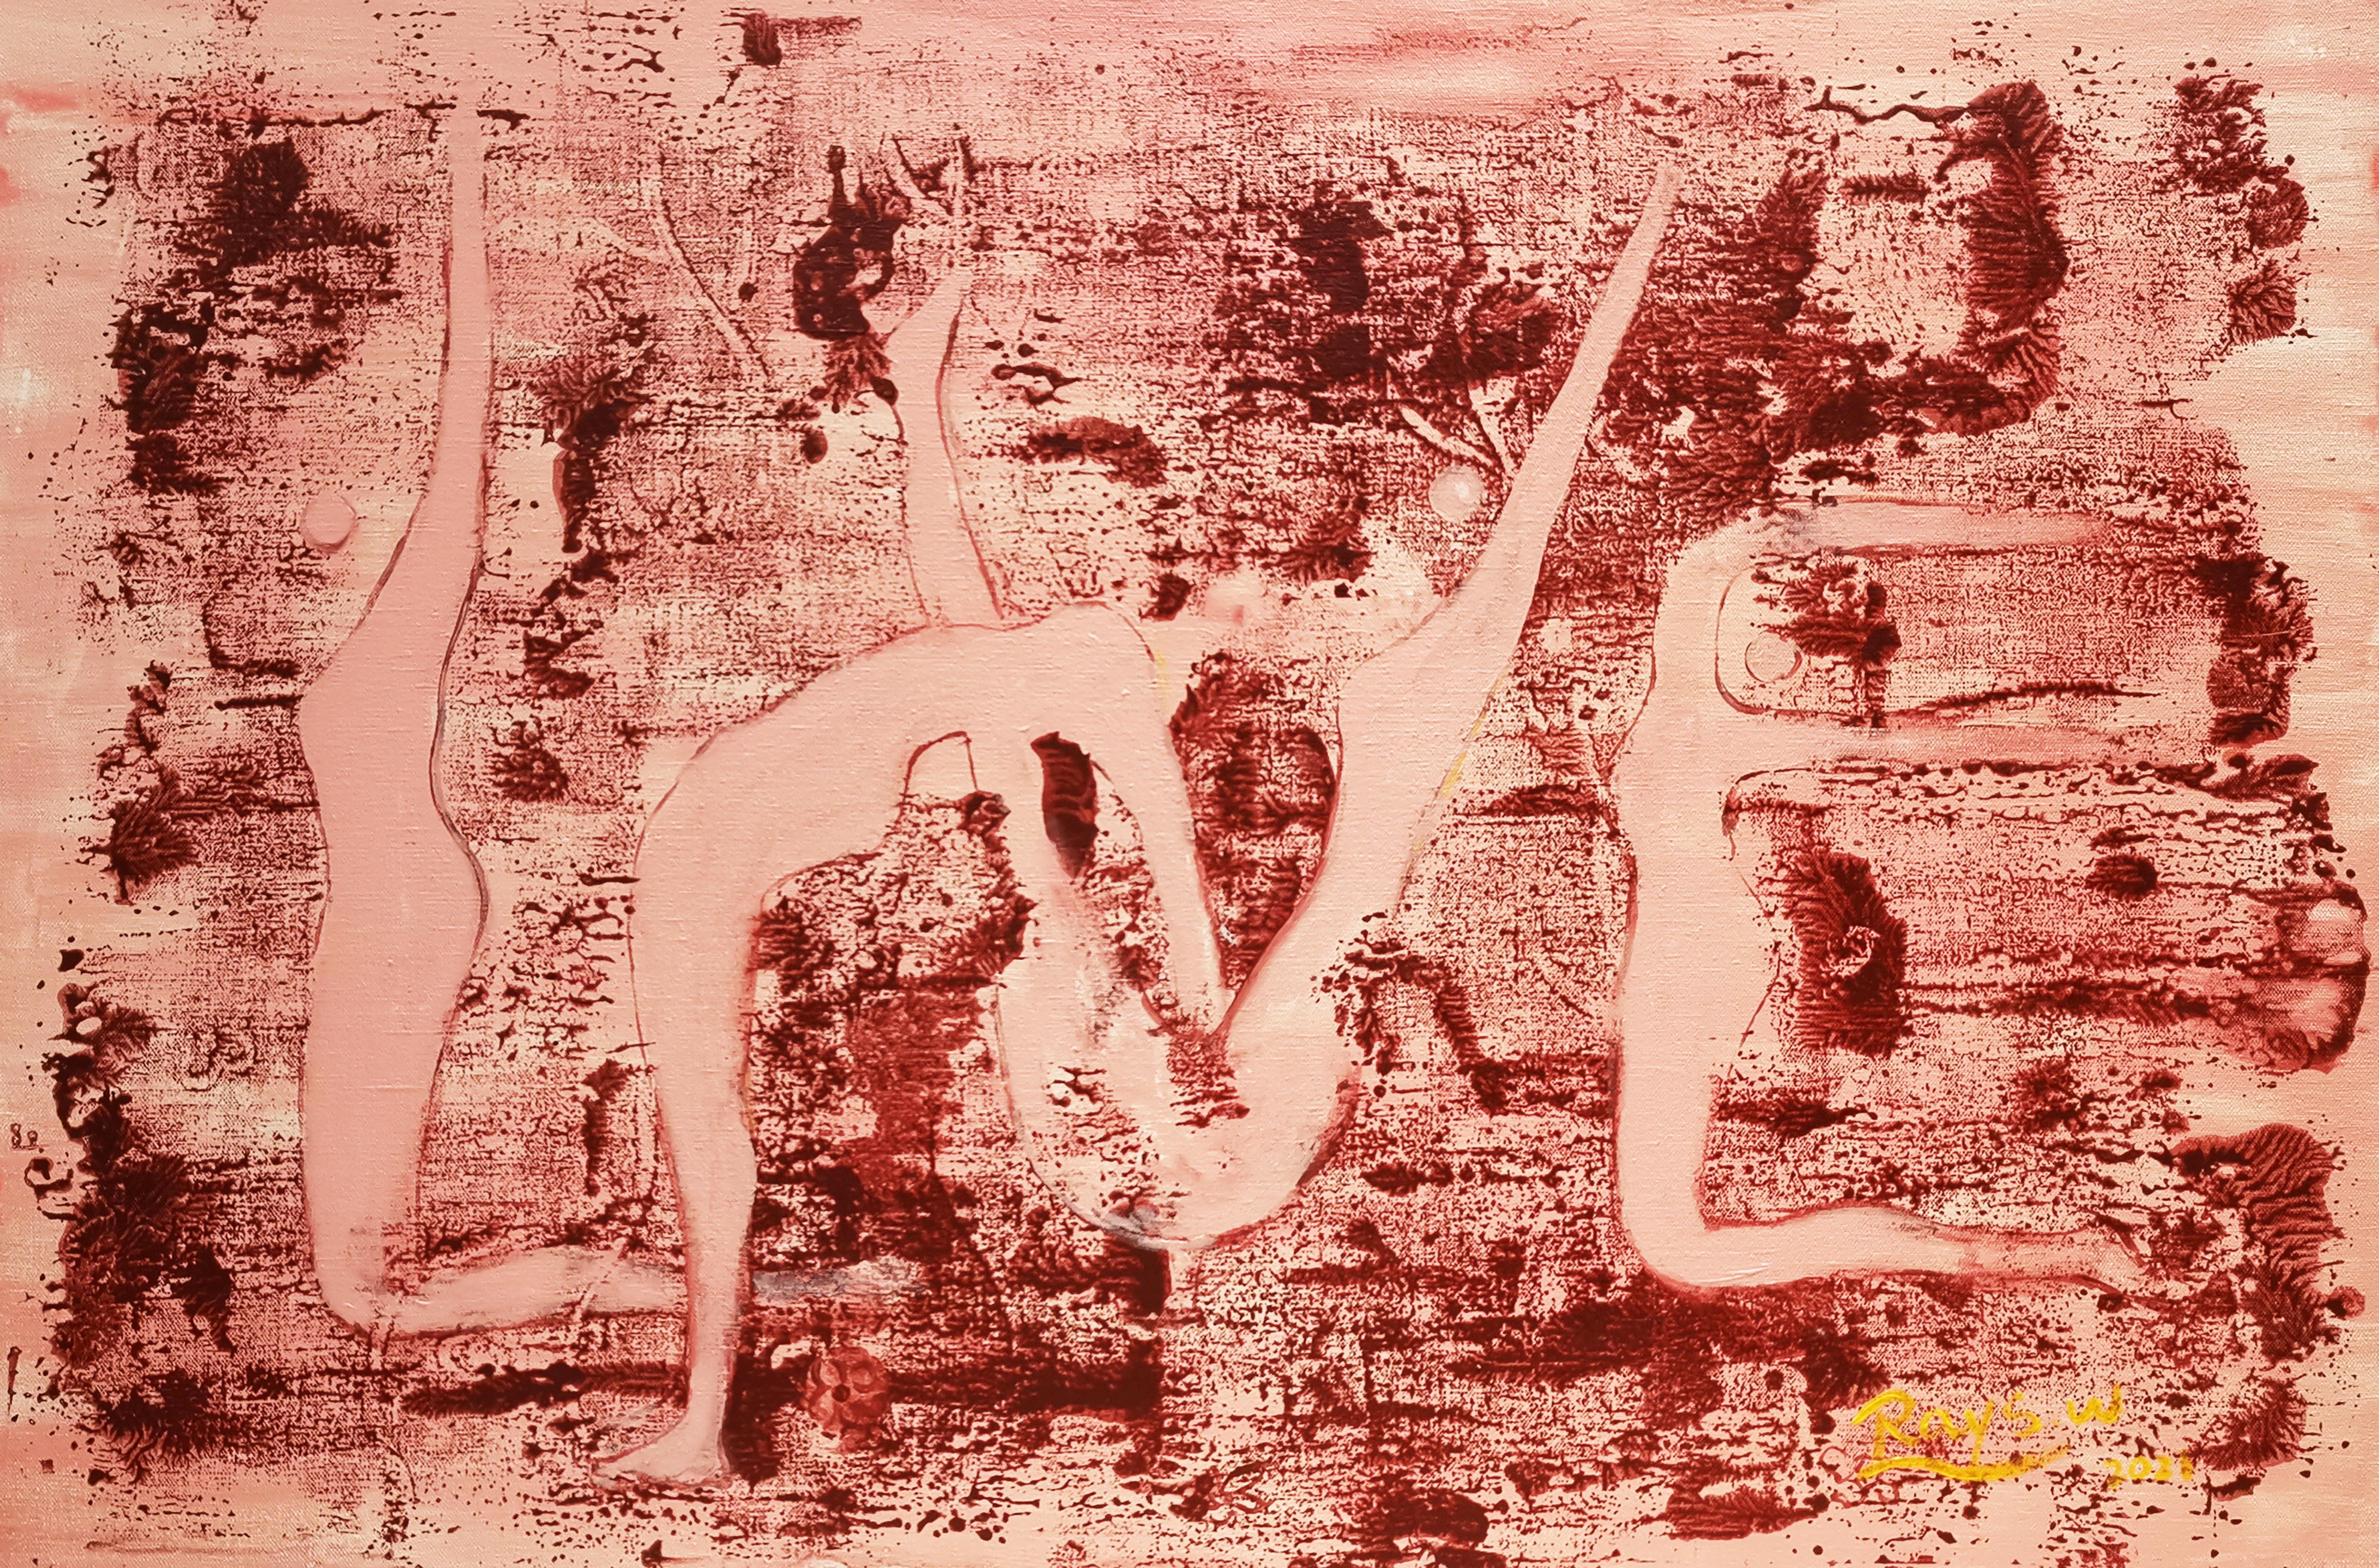 Abstract Painting Wan Rui - Peinture expressionniste abstraite - Les mythes de l'amour 